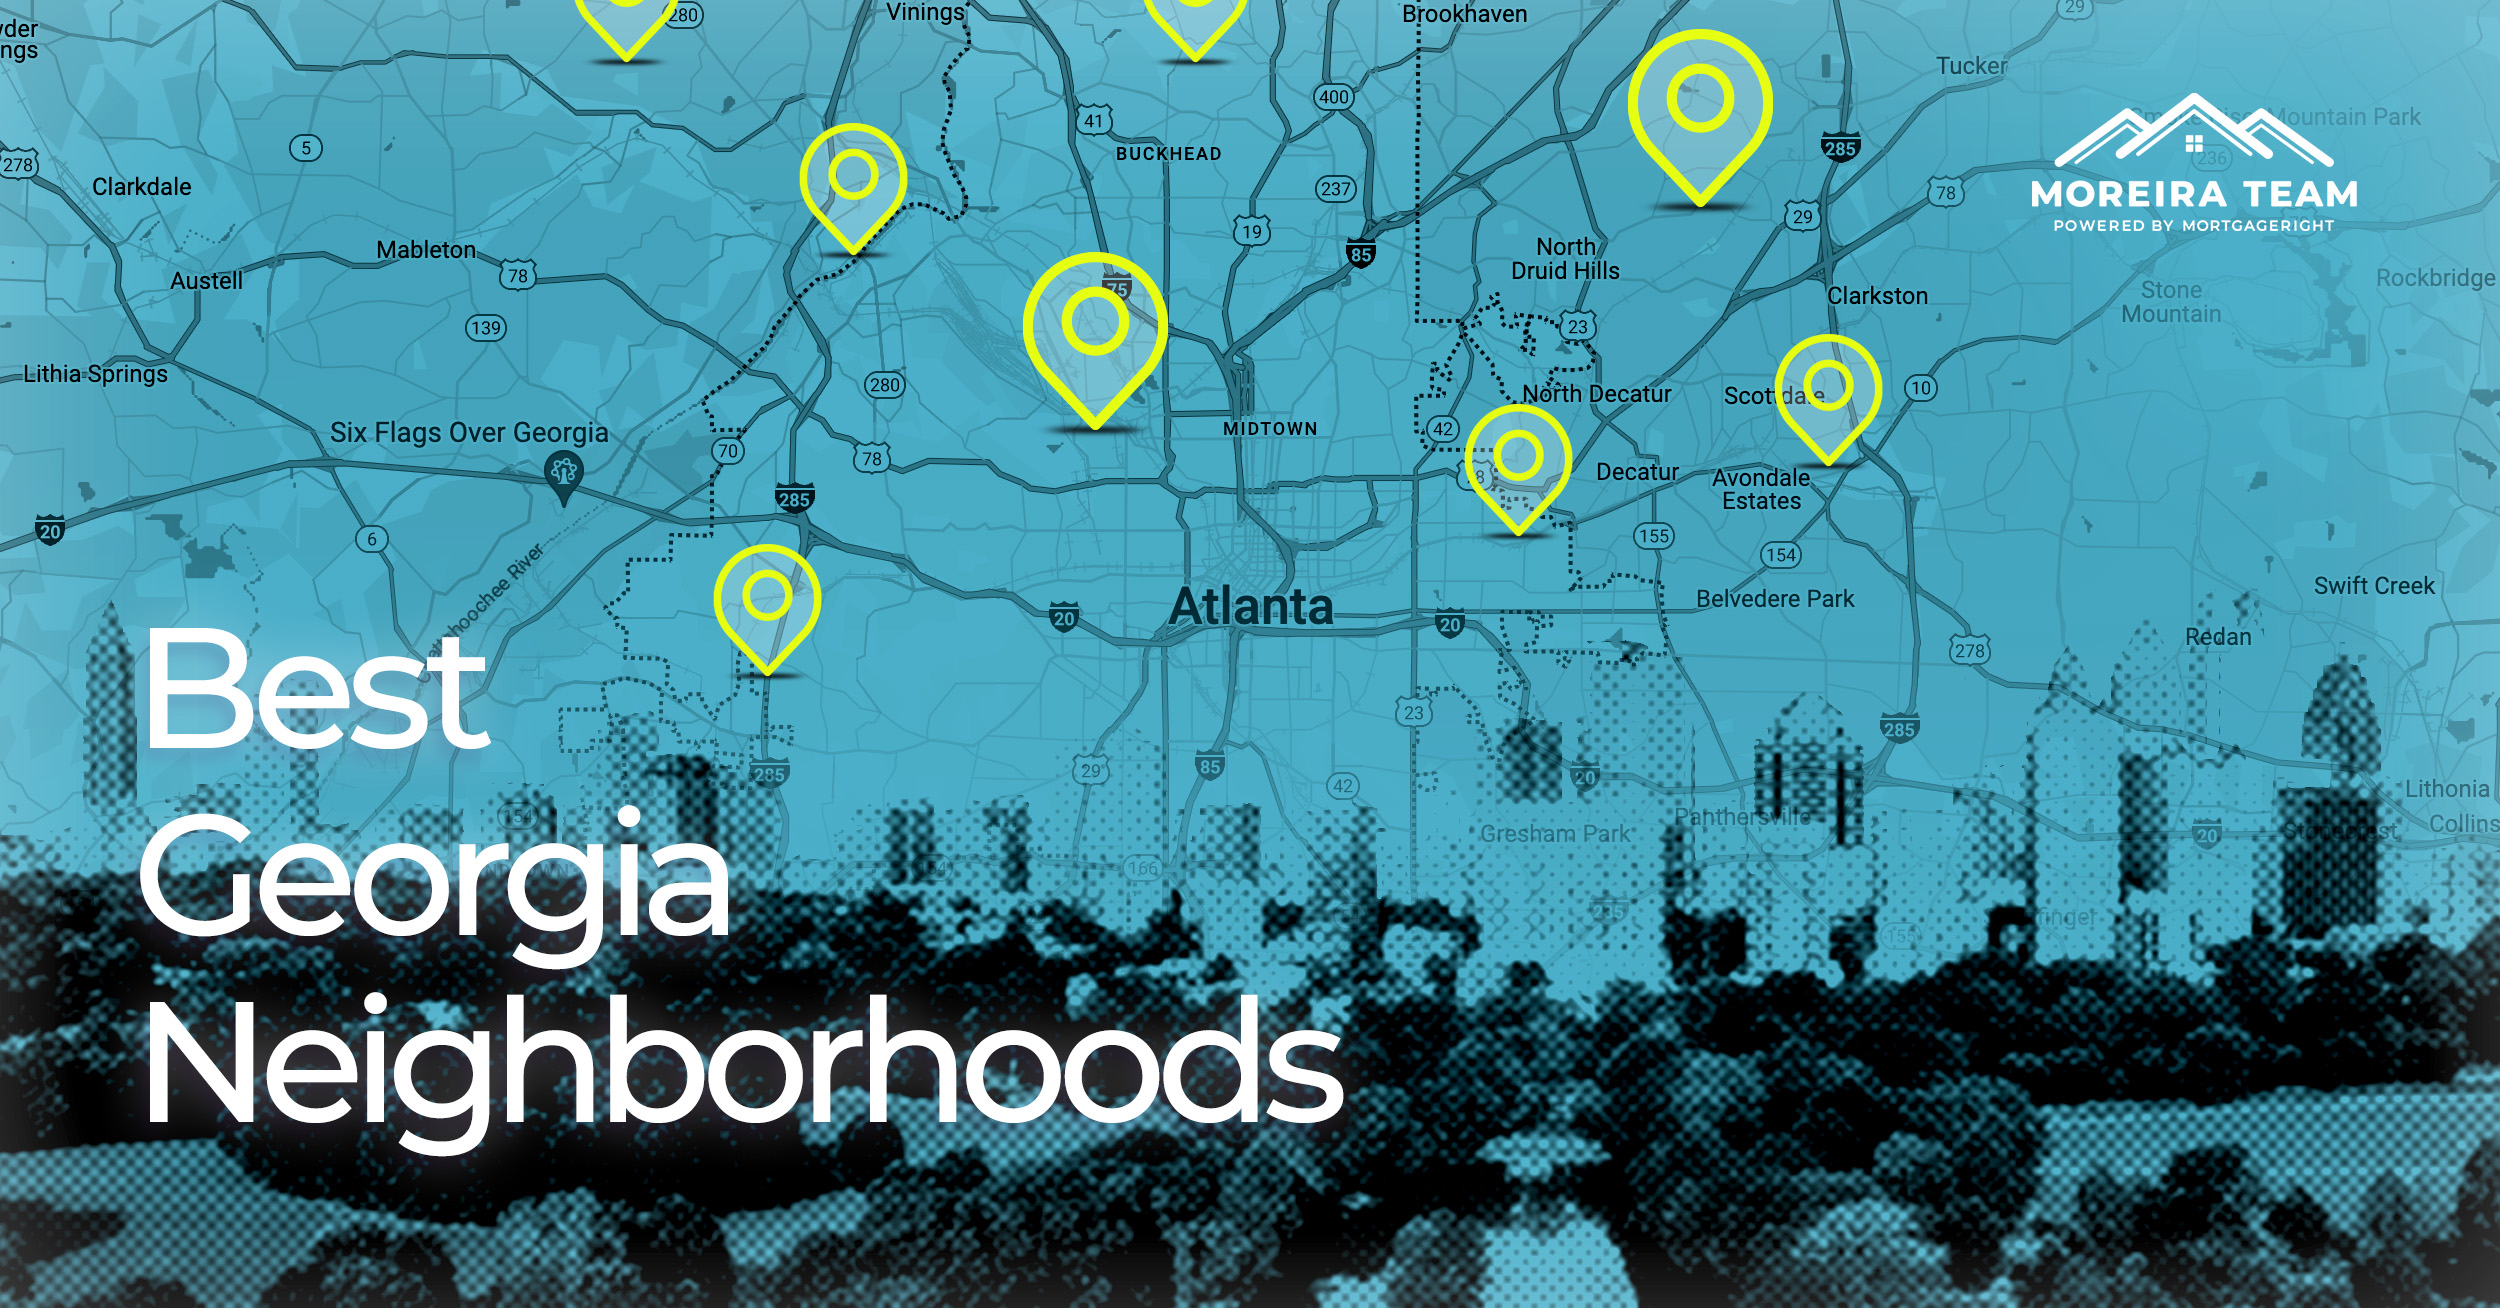 Best Neighborhoods in Georgia According to One of the Best Mortgage Companies in Georgia